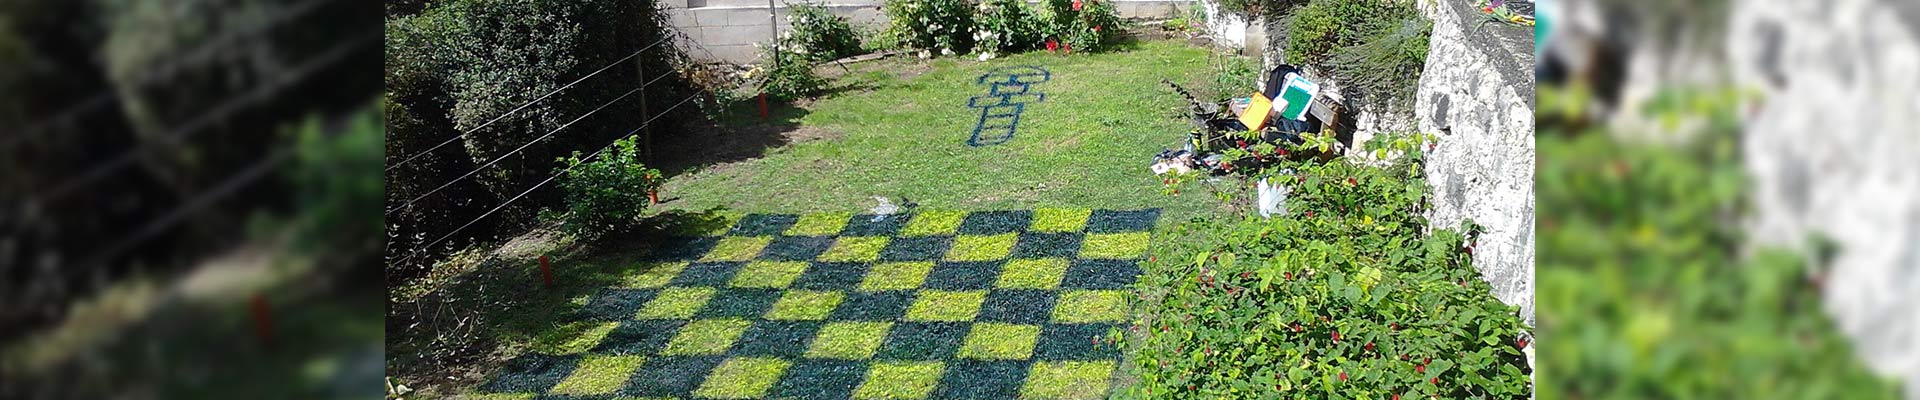 Games in the garden, chess, checkerboards, twister, children's surprise